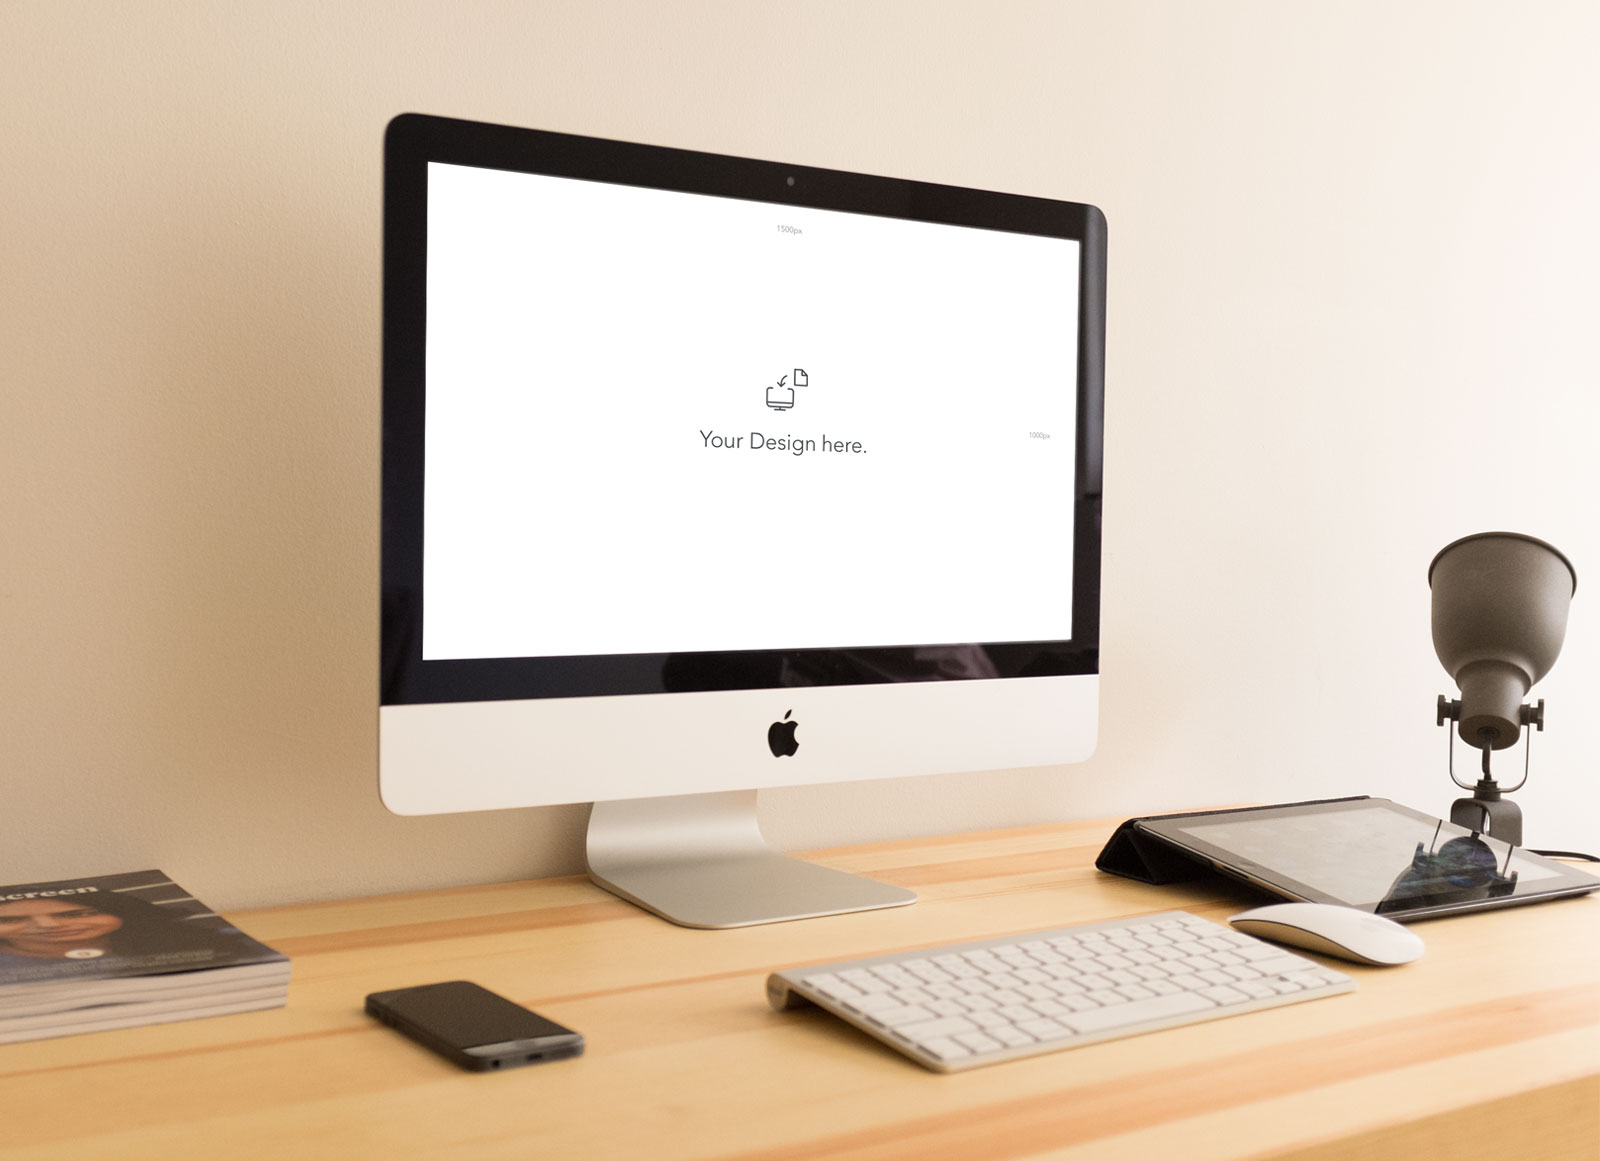 Free-Apple-iMac-Workplace-Mockup-PSD